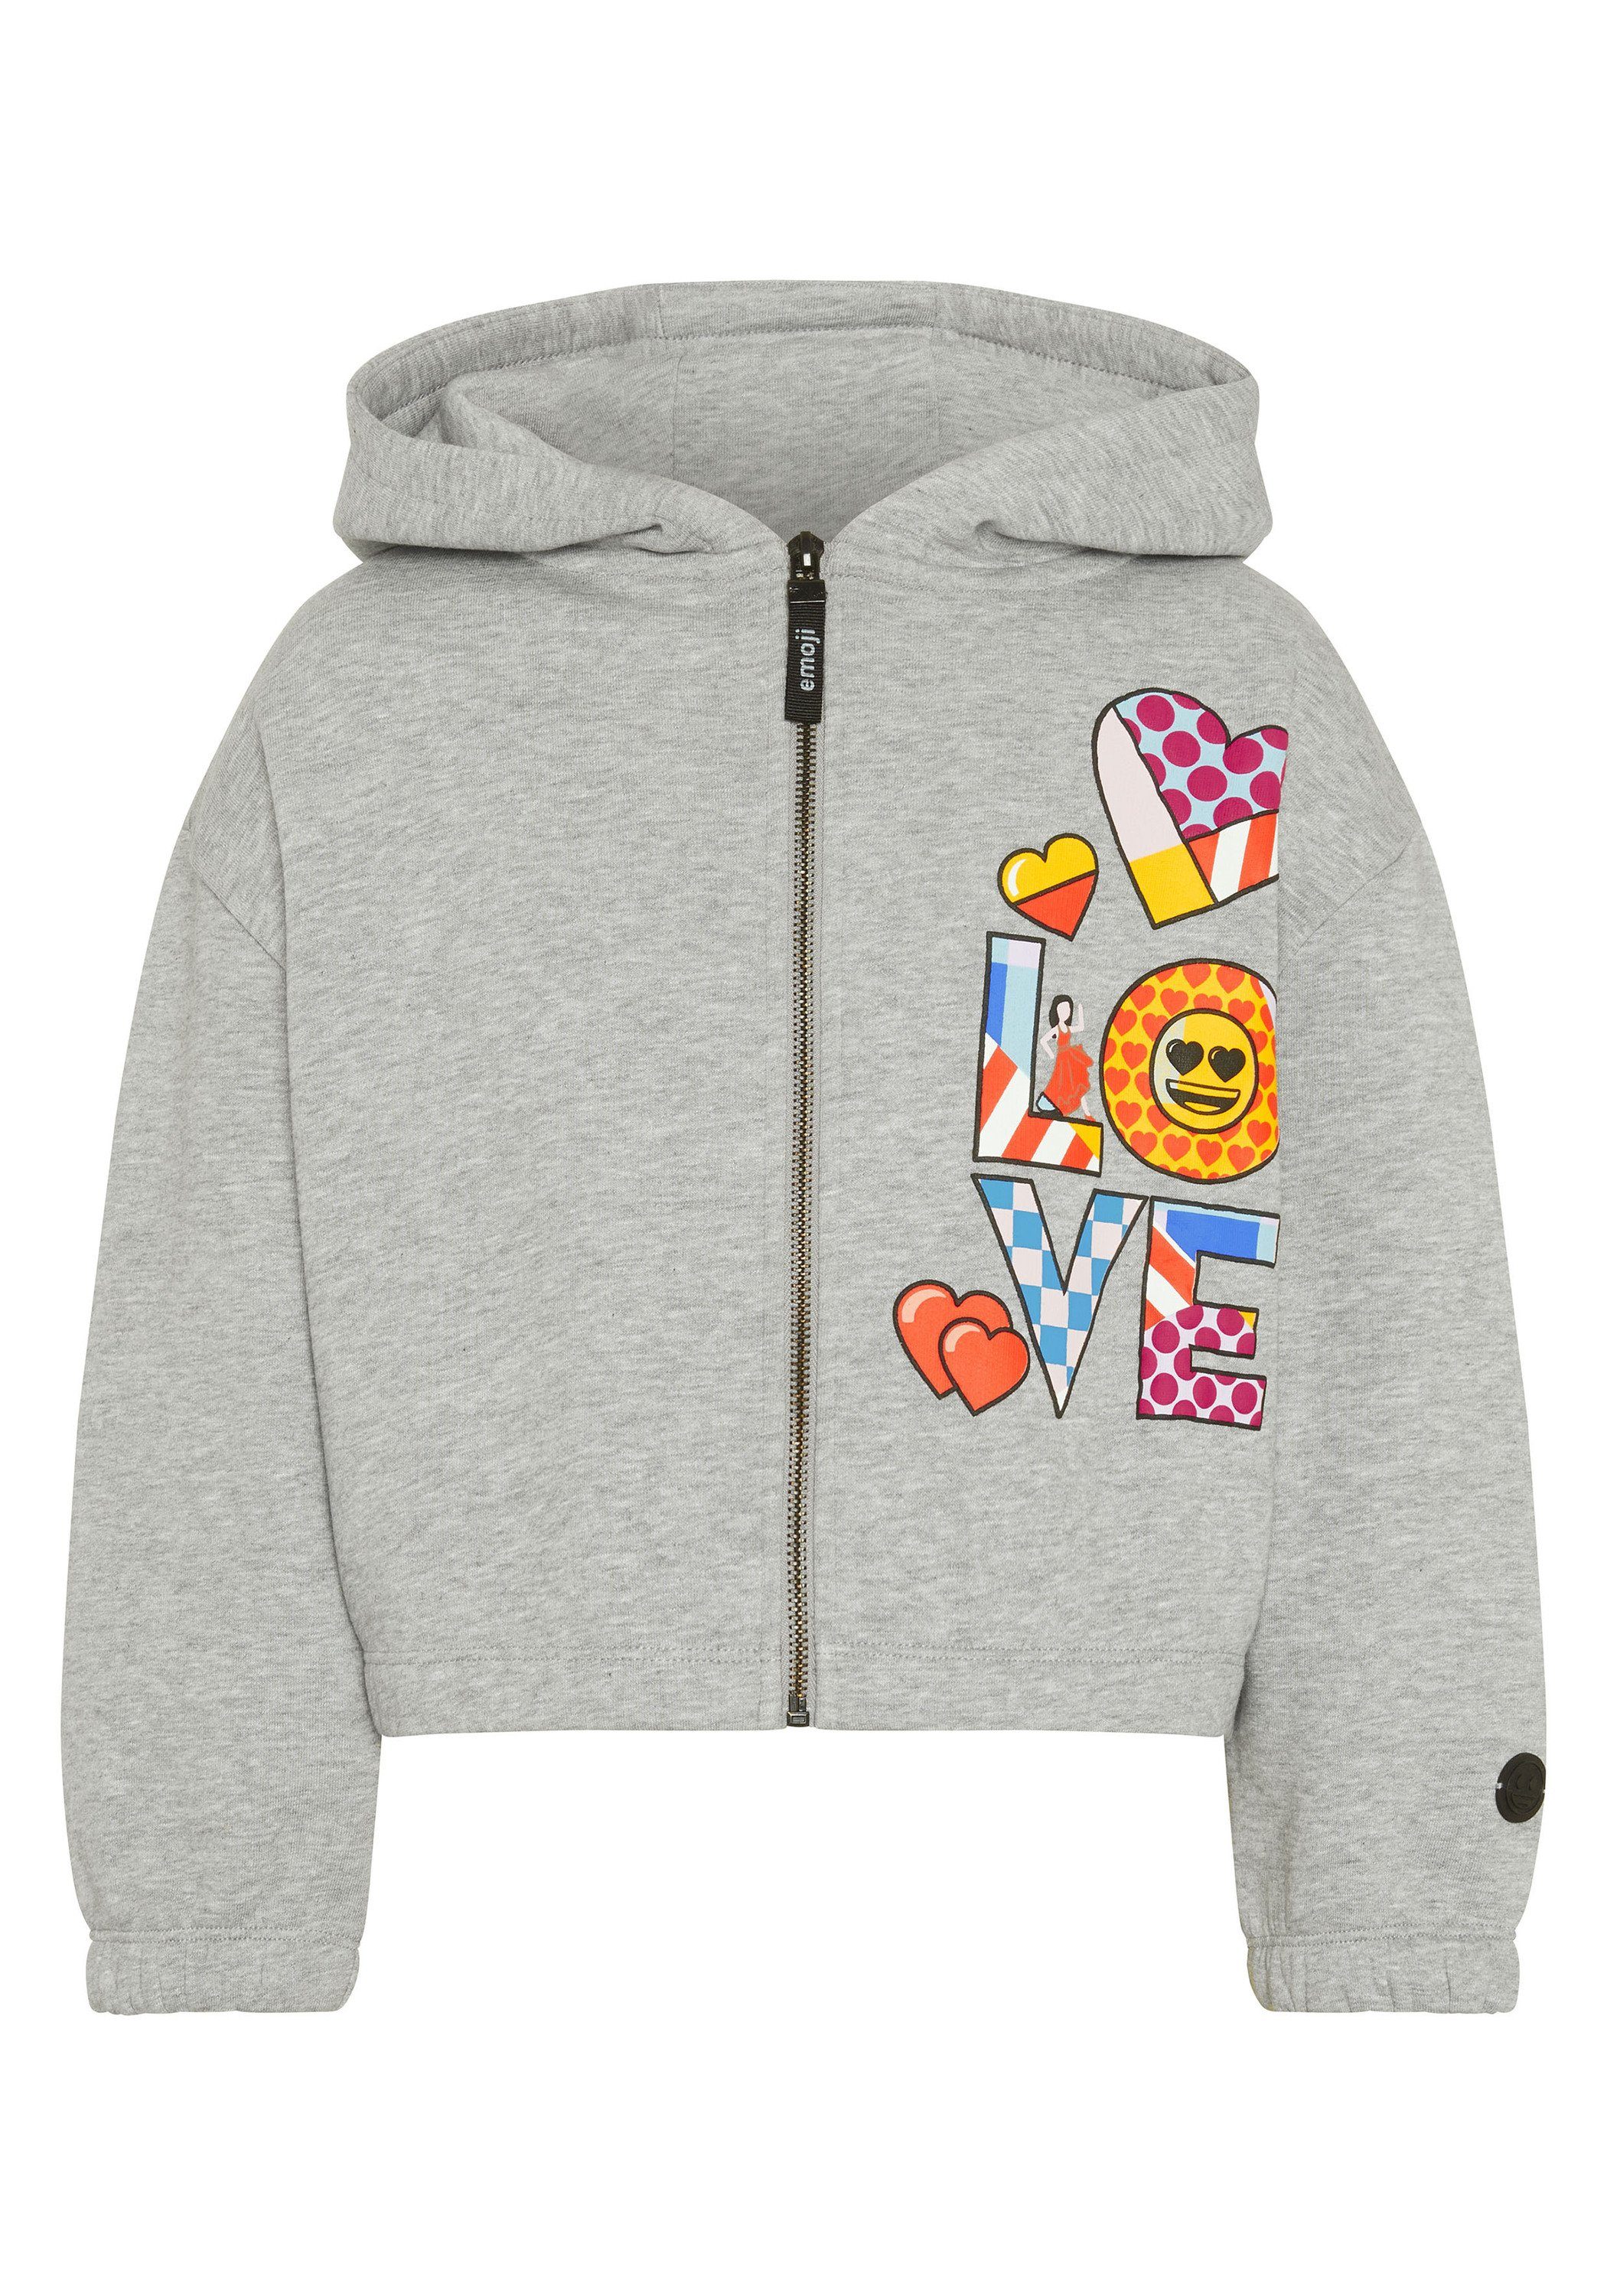 Emoji Sweatjacke mit LOVE-Print Kapuze und